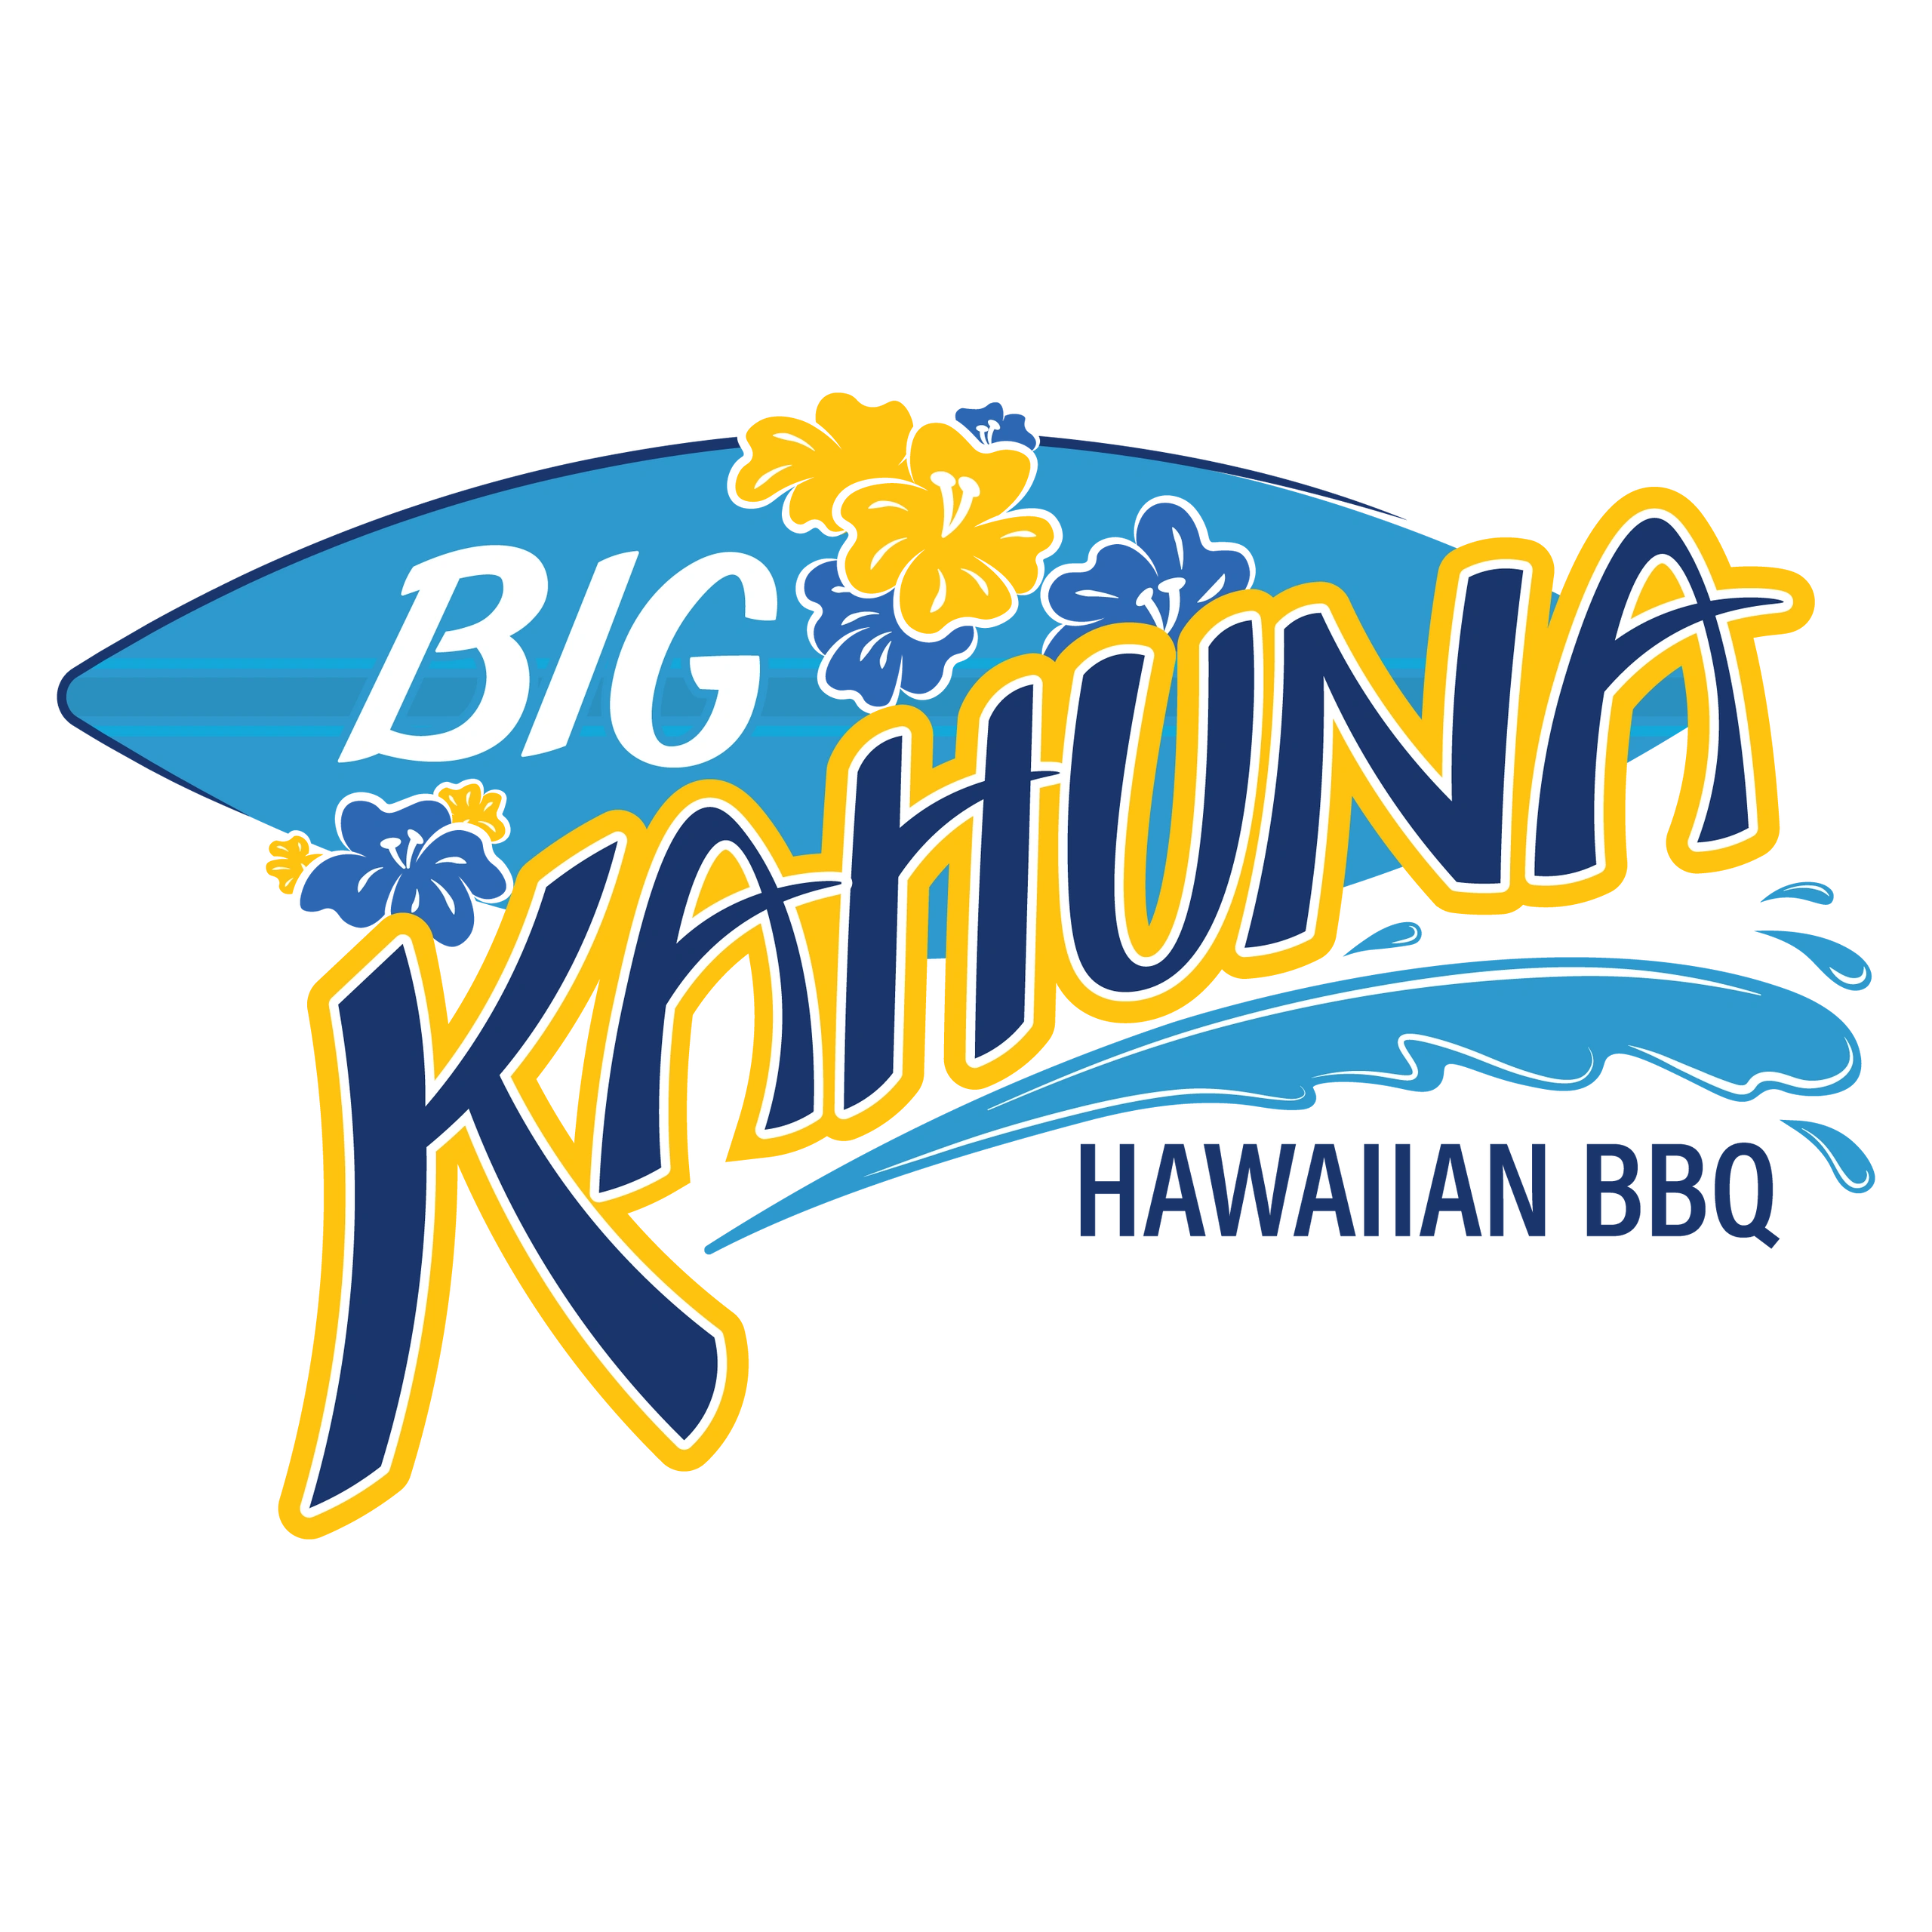 Big Kahuna Restaurant, Takeout Food, Bar